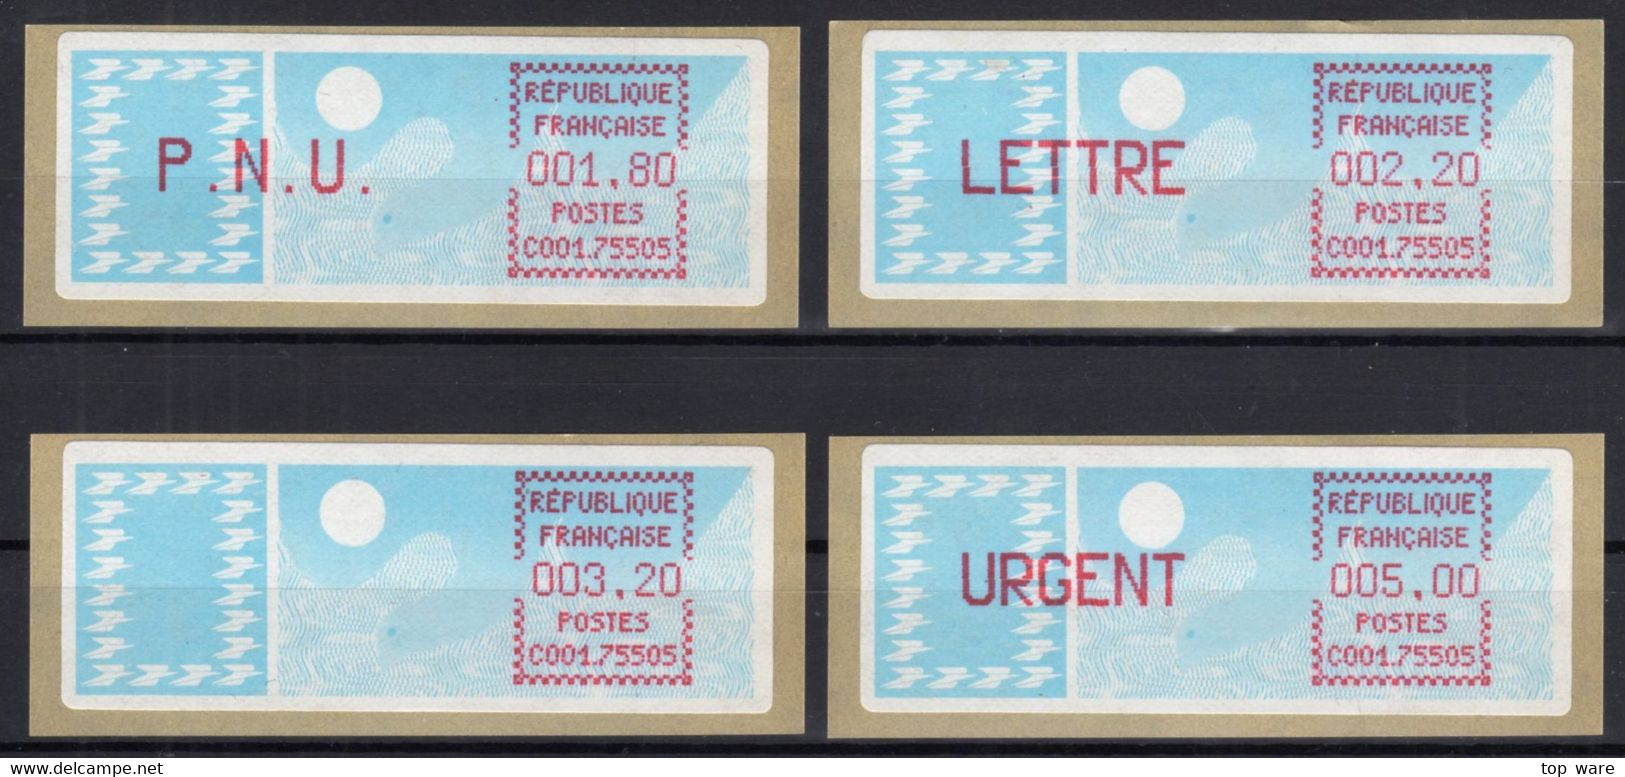 France ATM Stamps C001.75505 Michel 6.8 Zd Series ZS2 Neuf / MNH / Crouzet LSA Distributeurs Automatenmarken Frama Lisa - 1985 « Carrier » Papier